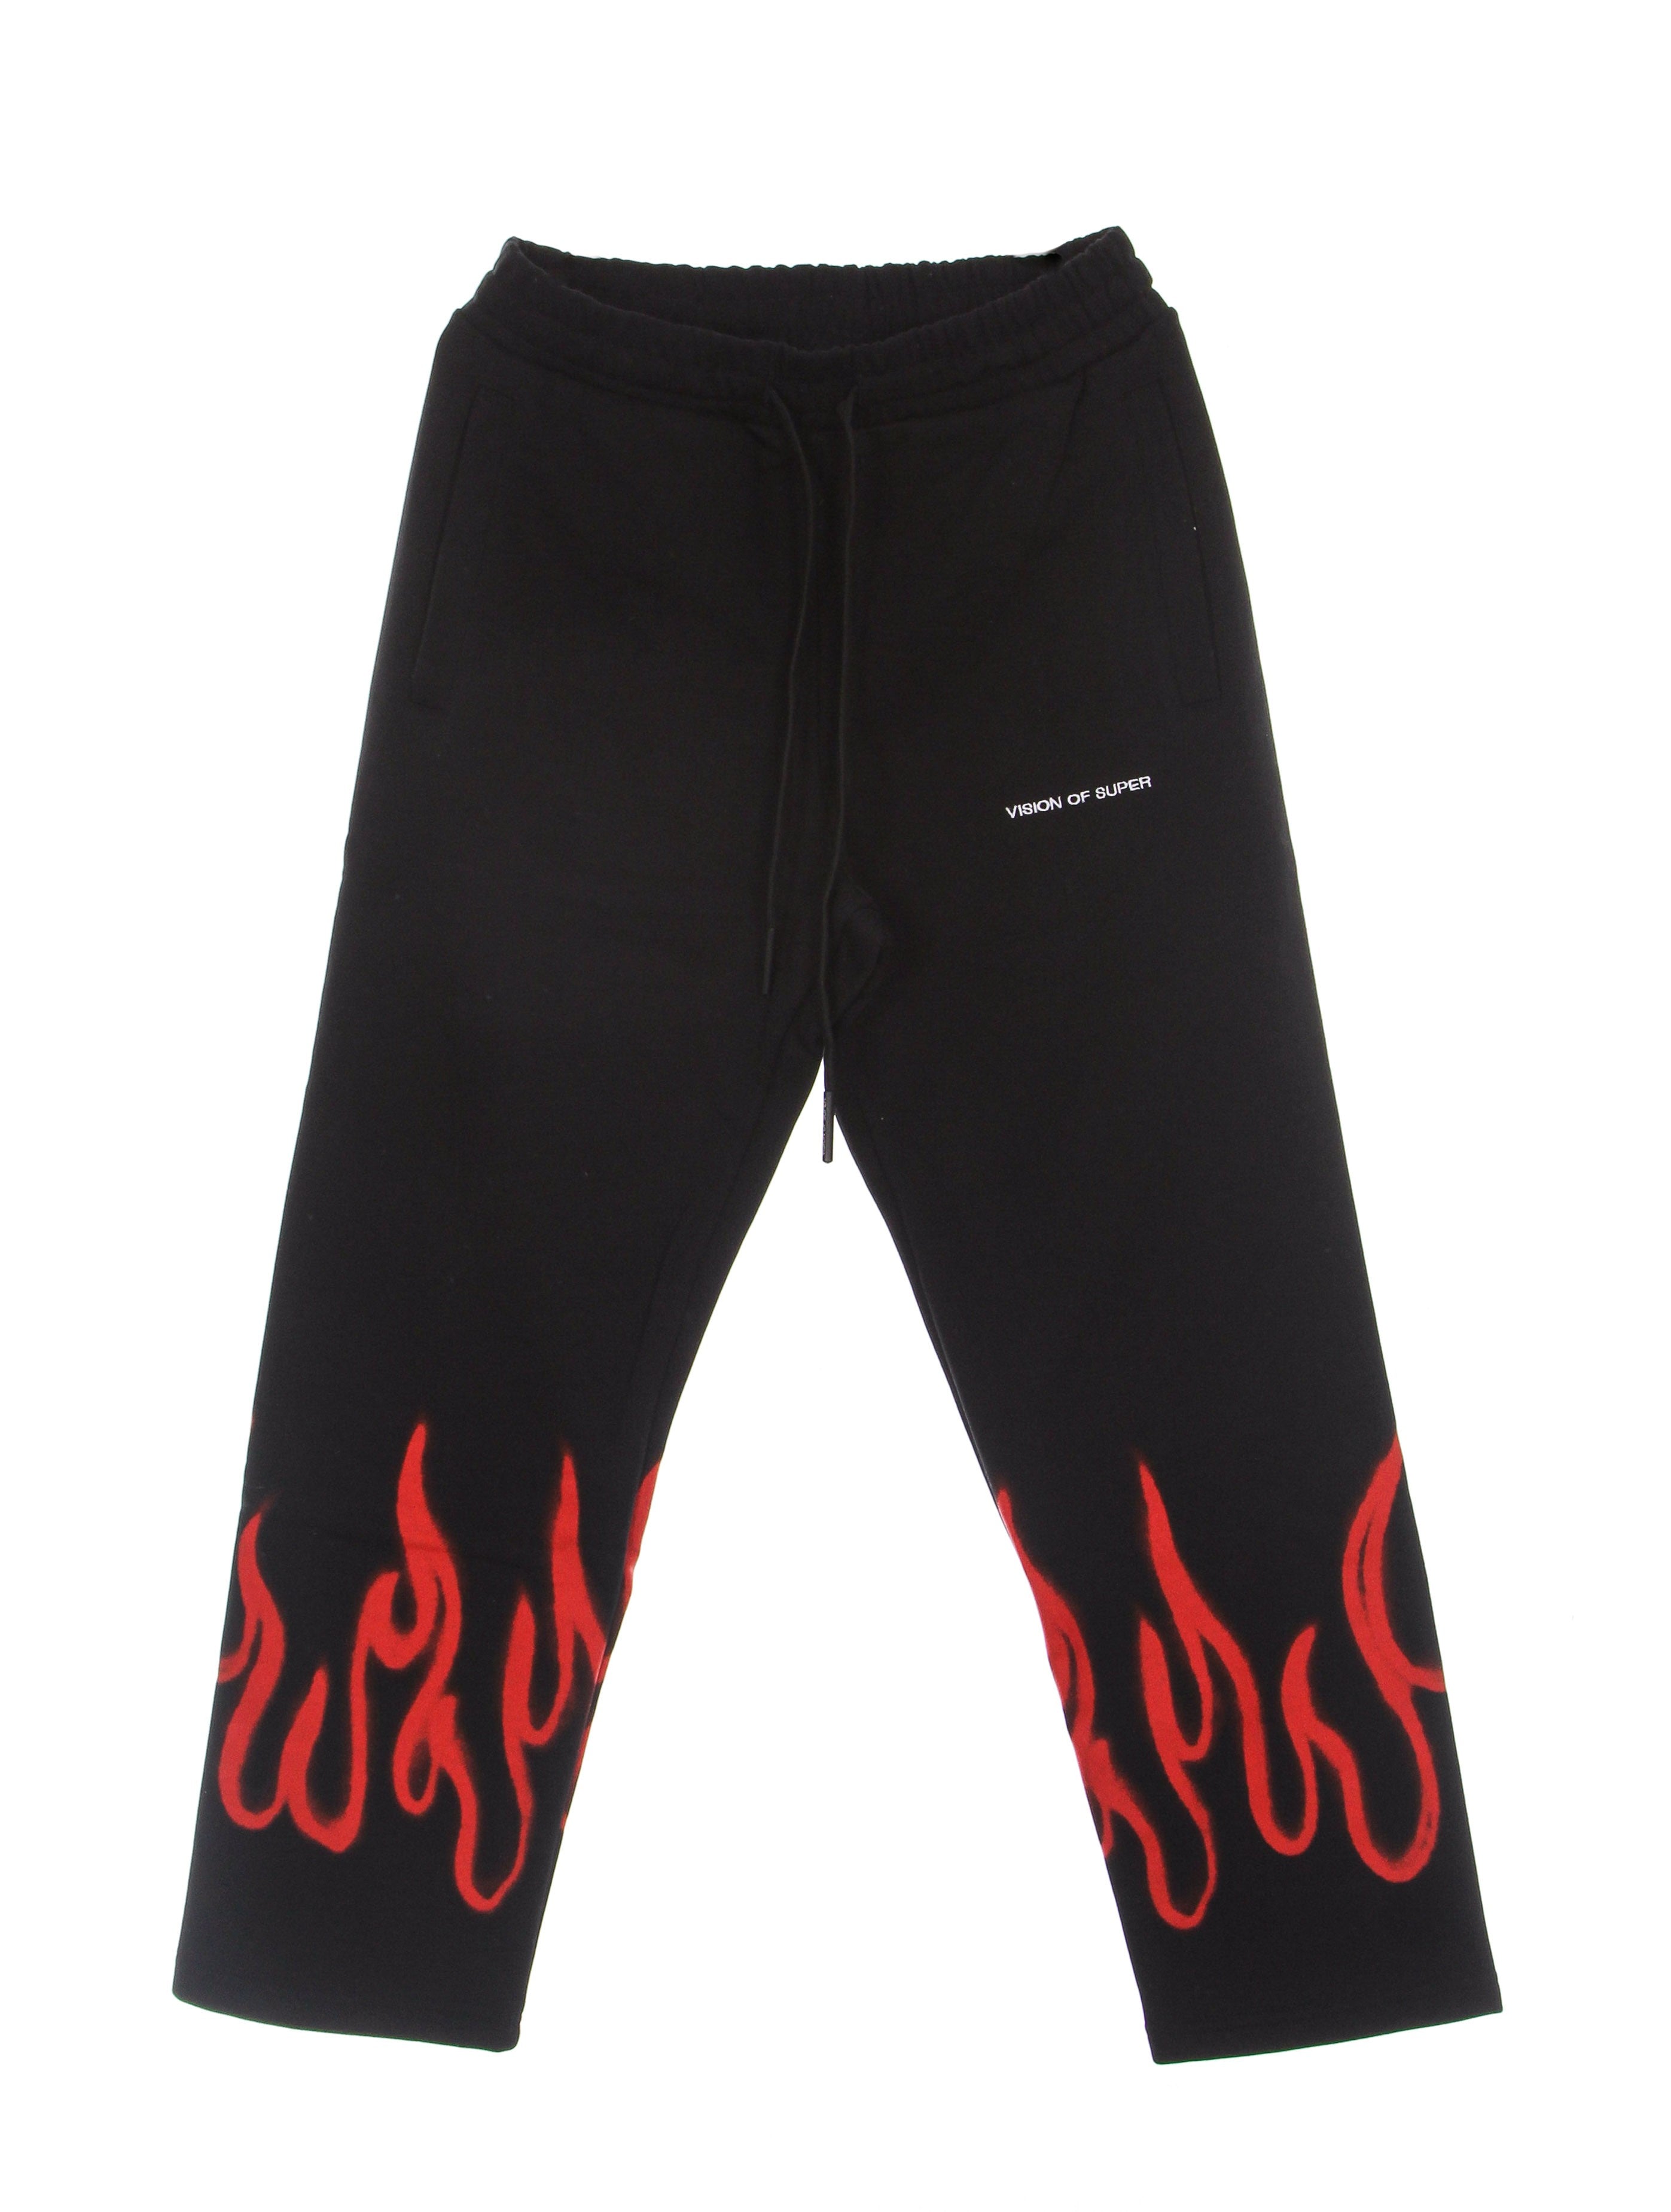 Vision Of Super, Pantalone Tuta Leggero Uomo Spray Flames Pants, 